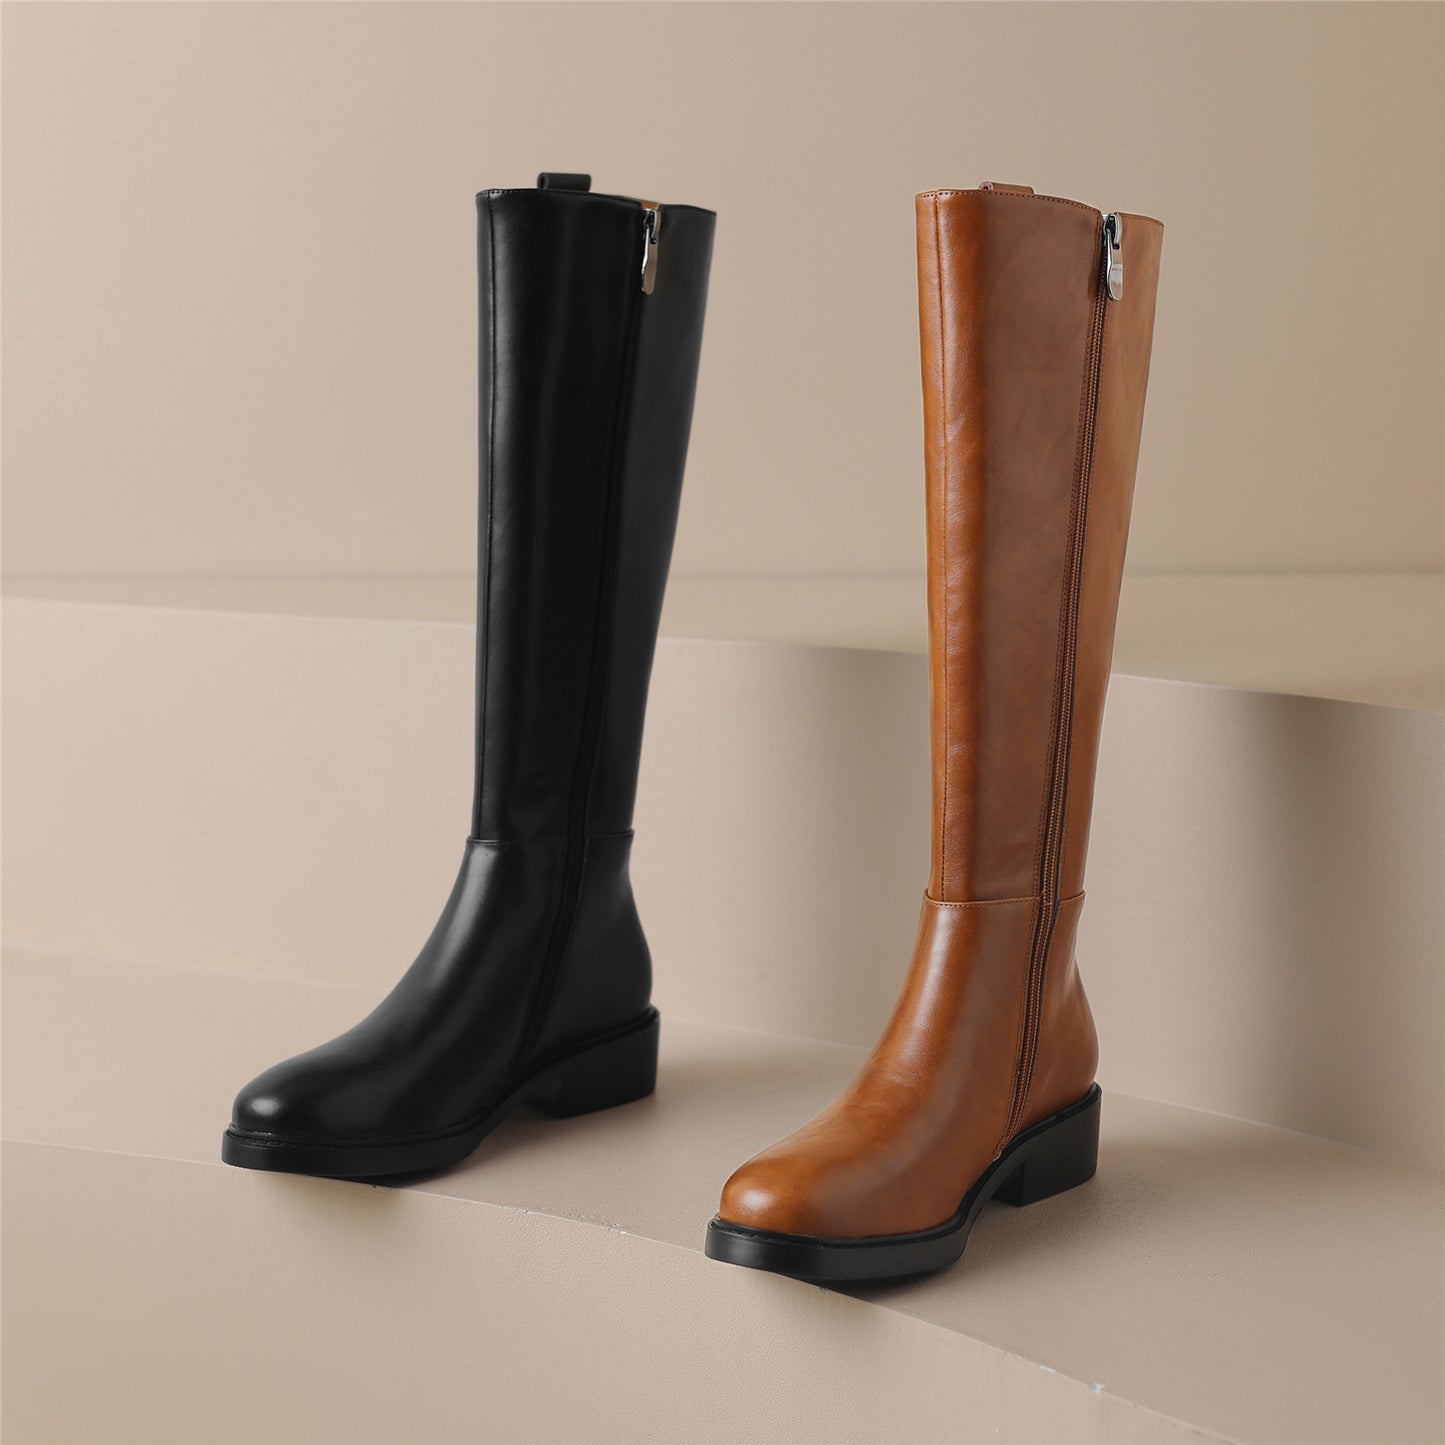 TinaCus Genuine Leather Women's Round Toe Side Zip Up Handmade Low Heel Weave Design Knee High Boots